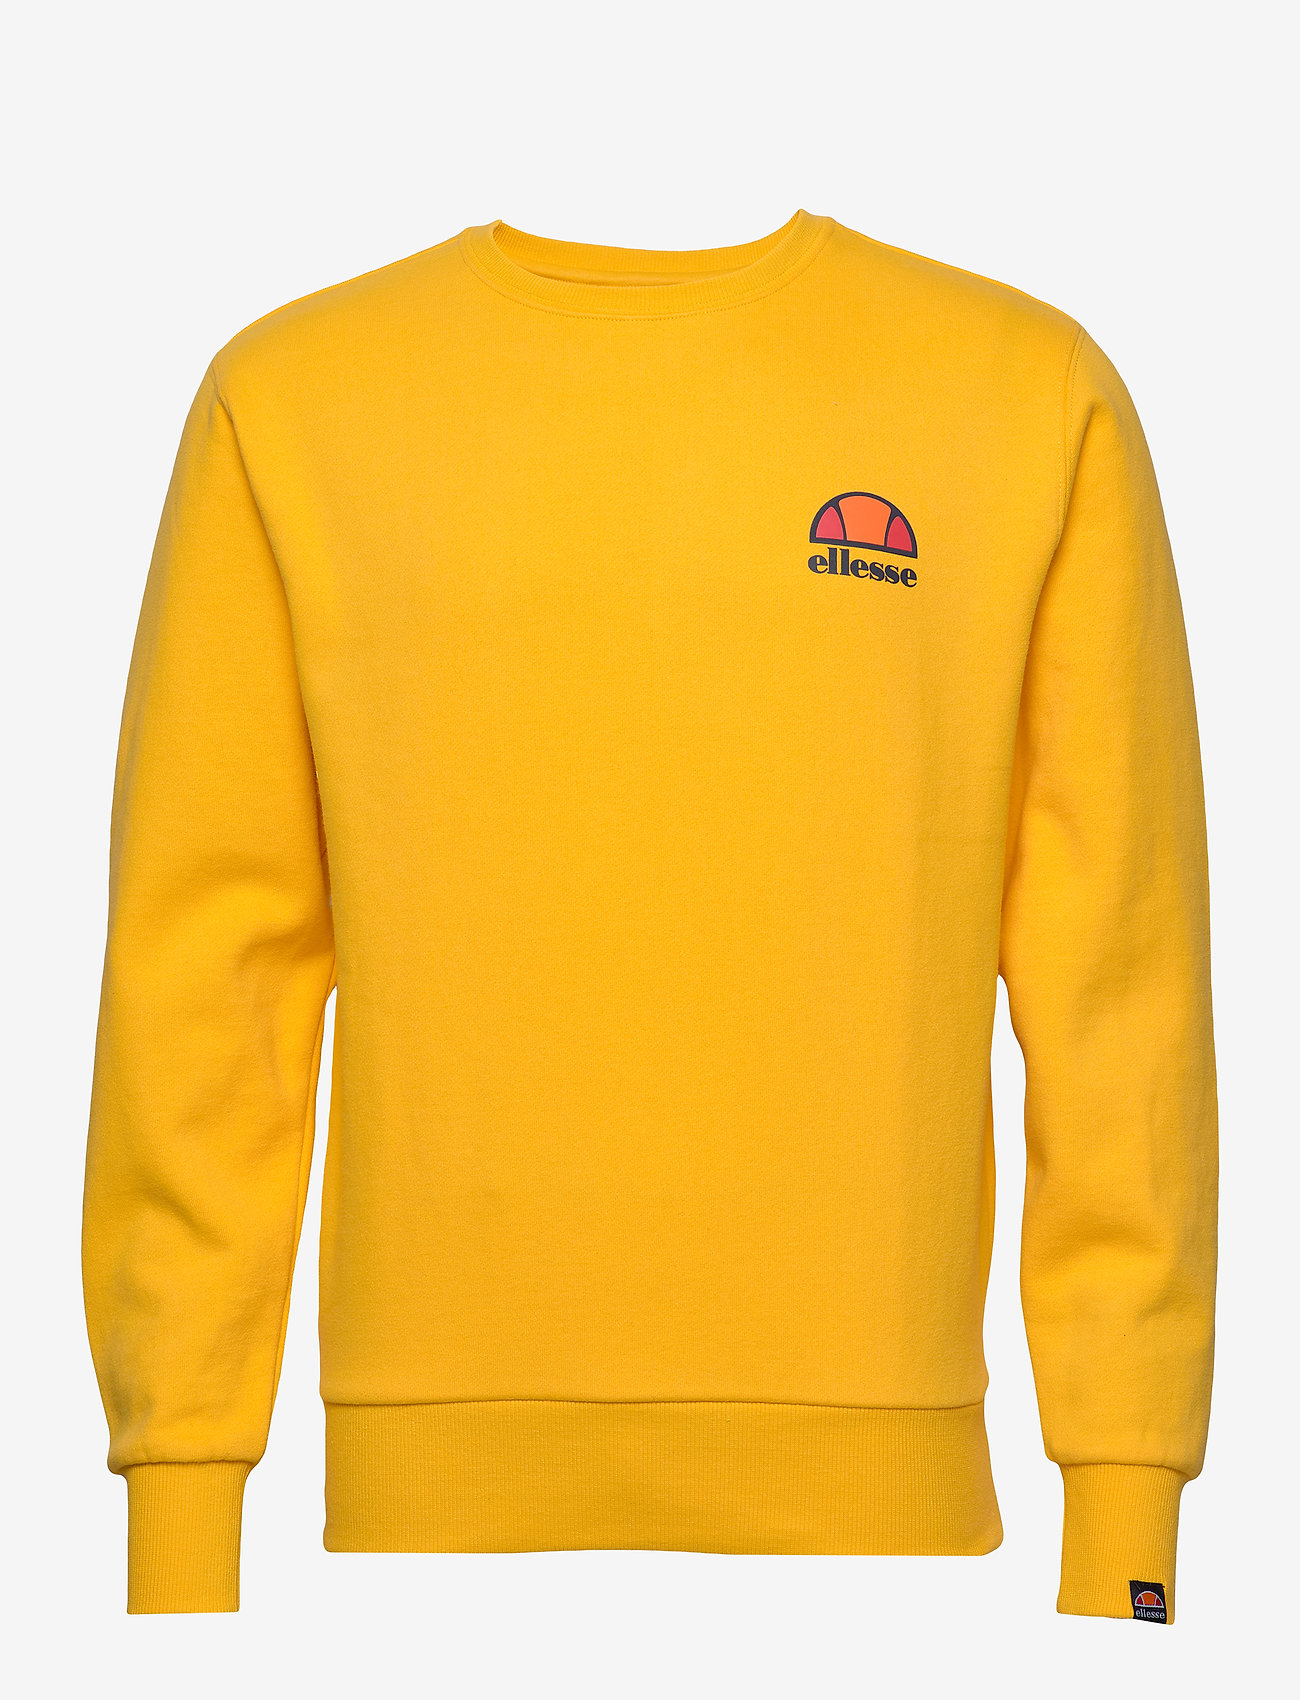 ellesse yellow sweatshirt